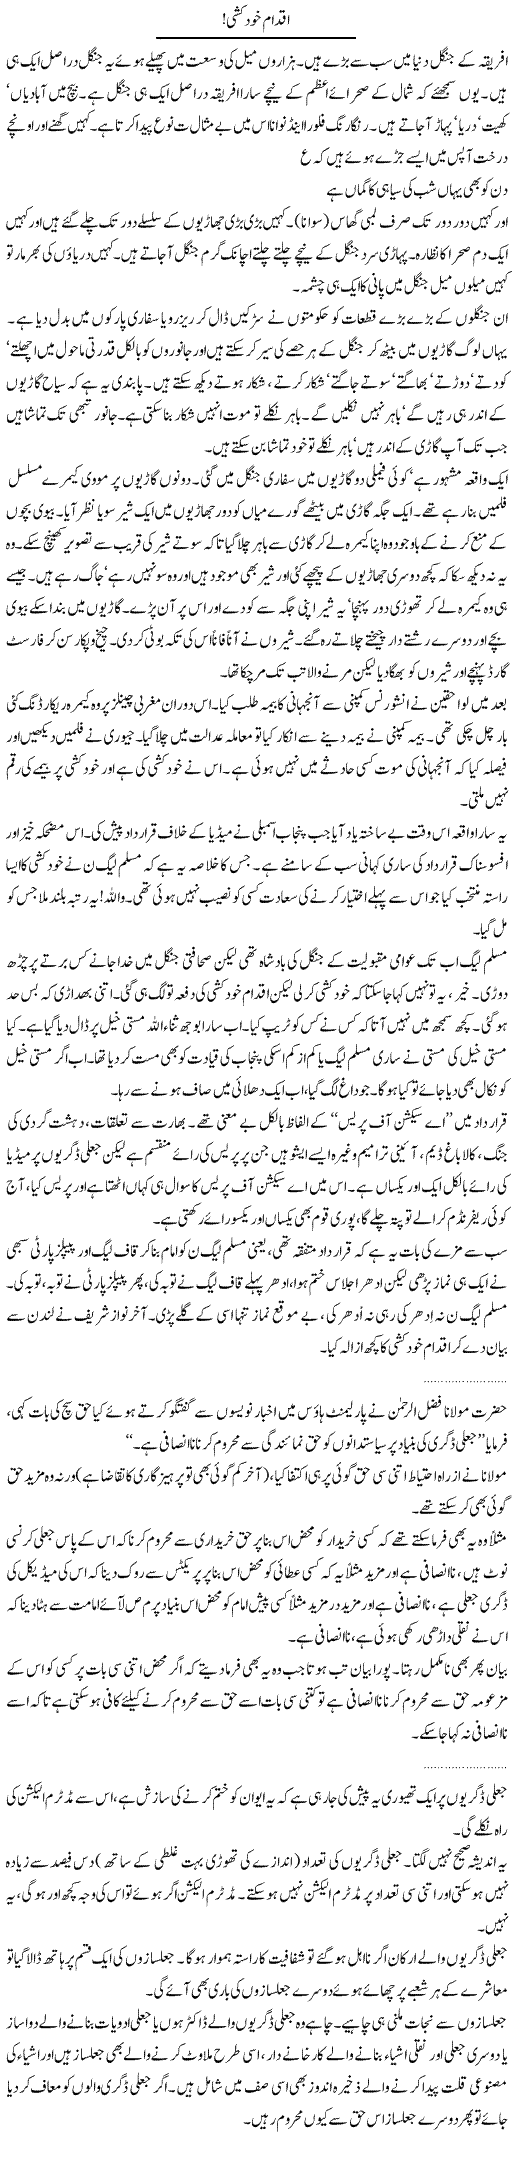 Aqdam Khud Kushi Express Column Abdullah Tariq 12 July 2010